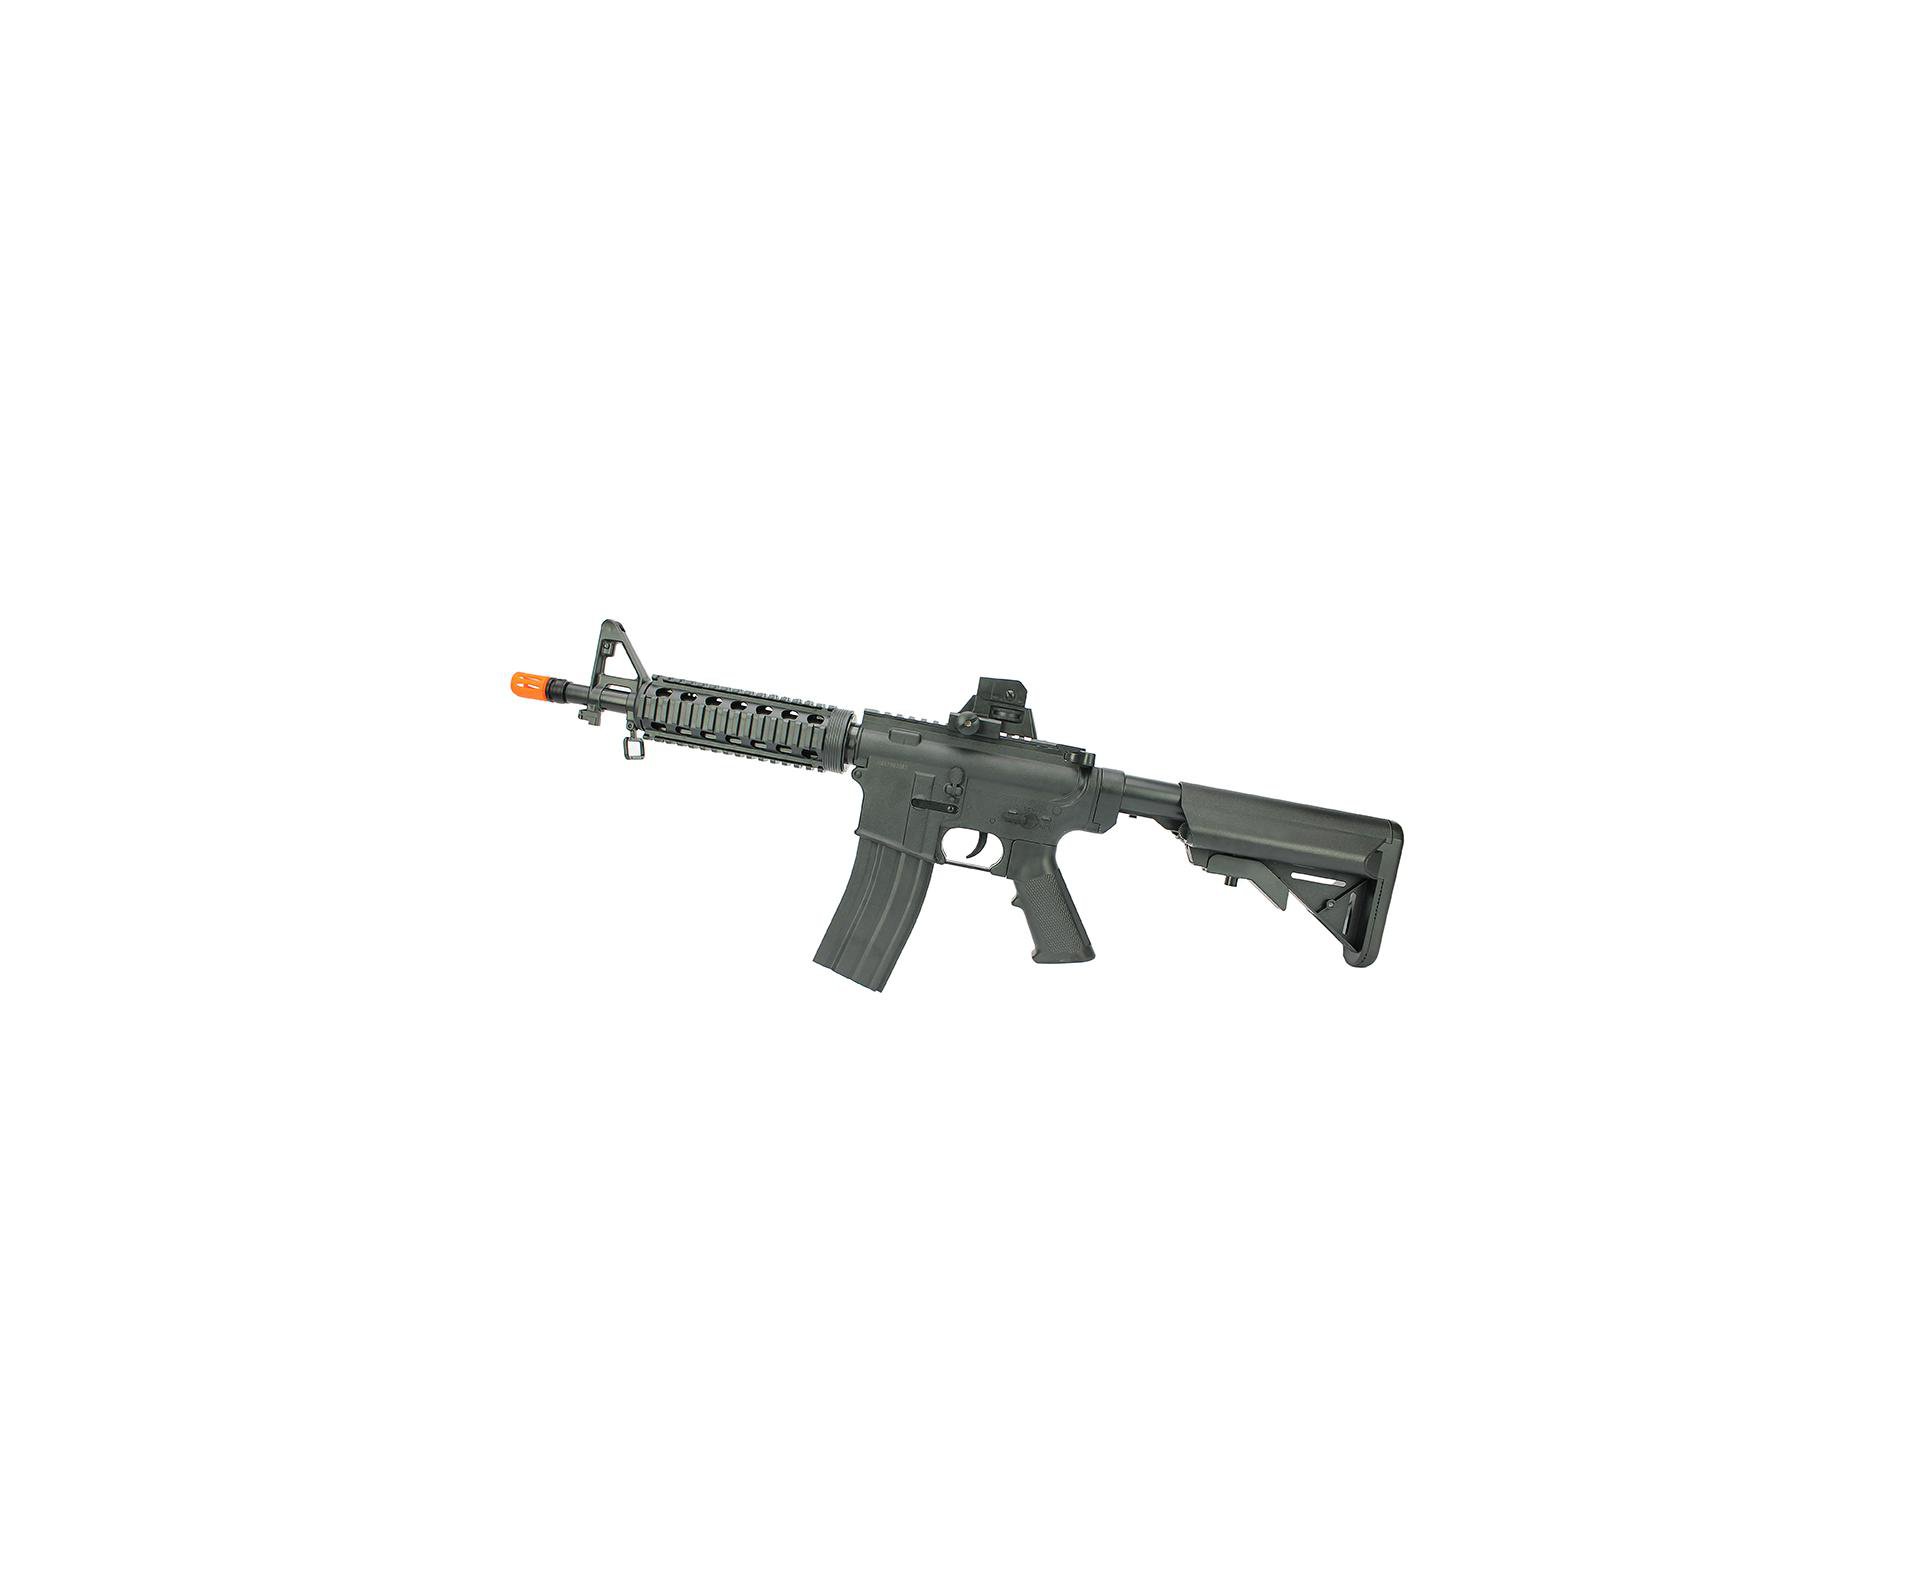 Kit Rifle M4 E Pistola V307 De Airsoft Vigor Vg Spring Rossi 6mm